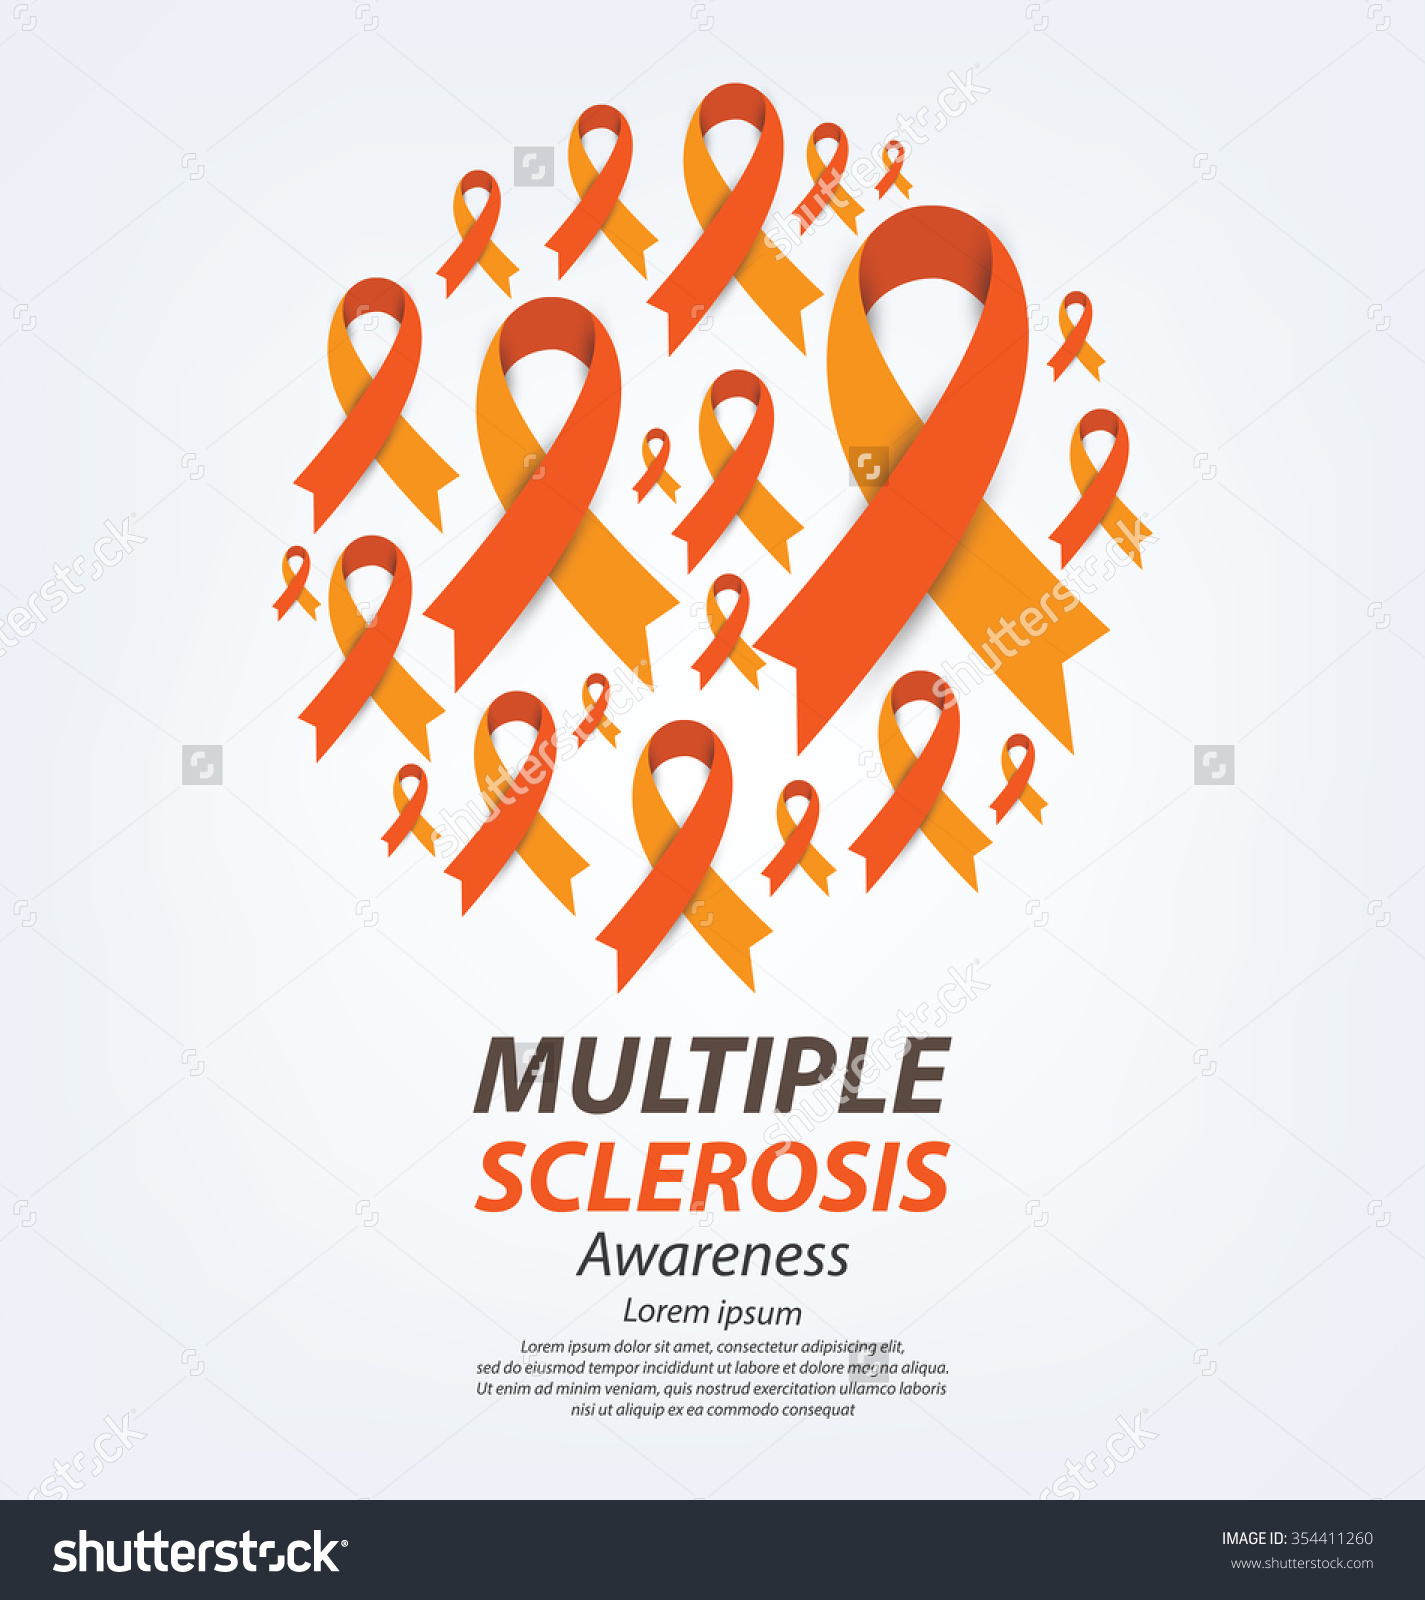 World Multiple Sclerosis Awareness Ribbons Illustration1425 x 1600